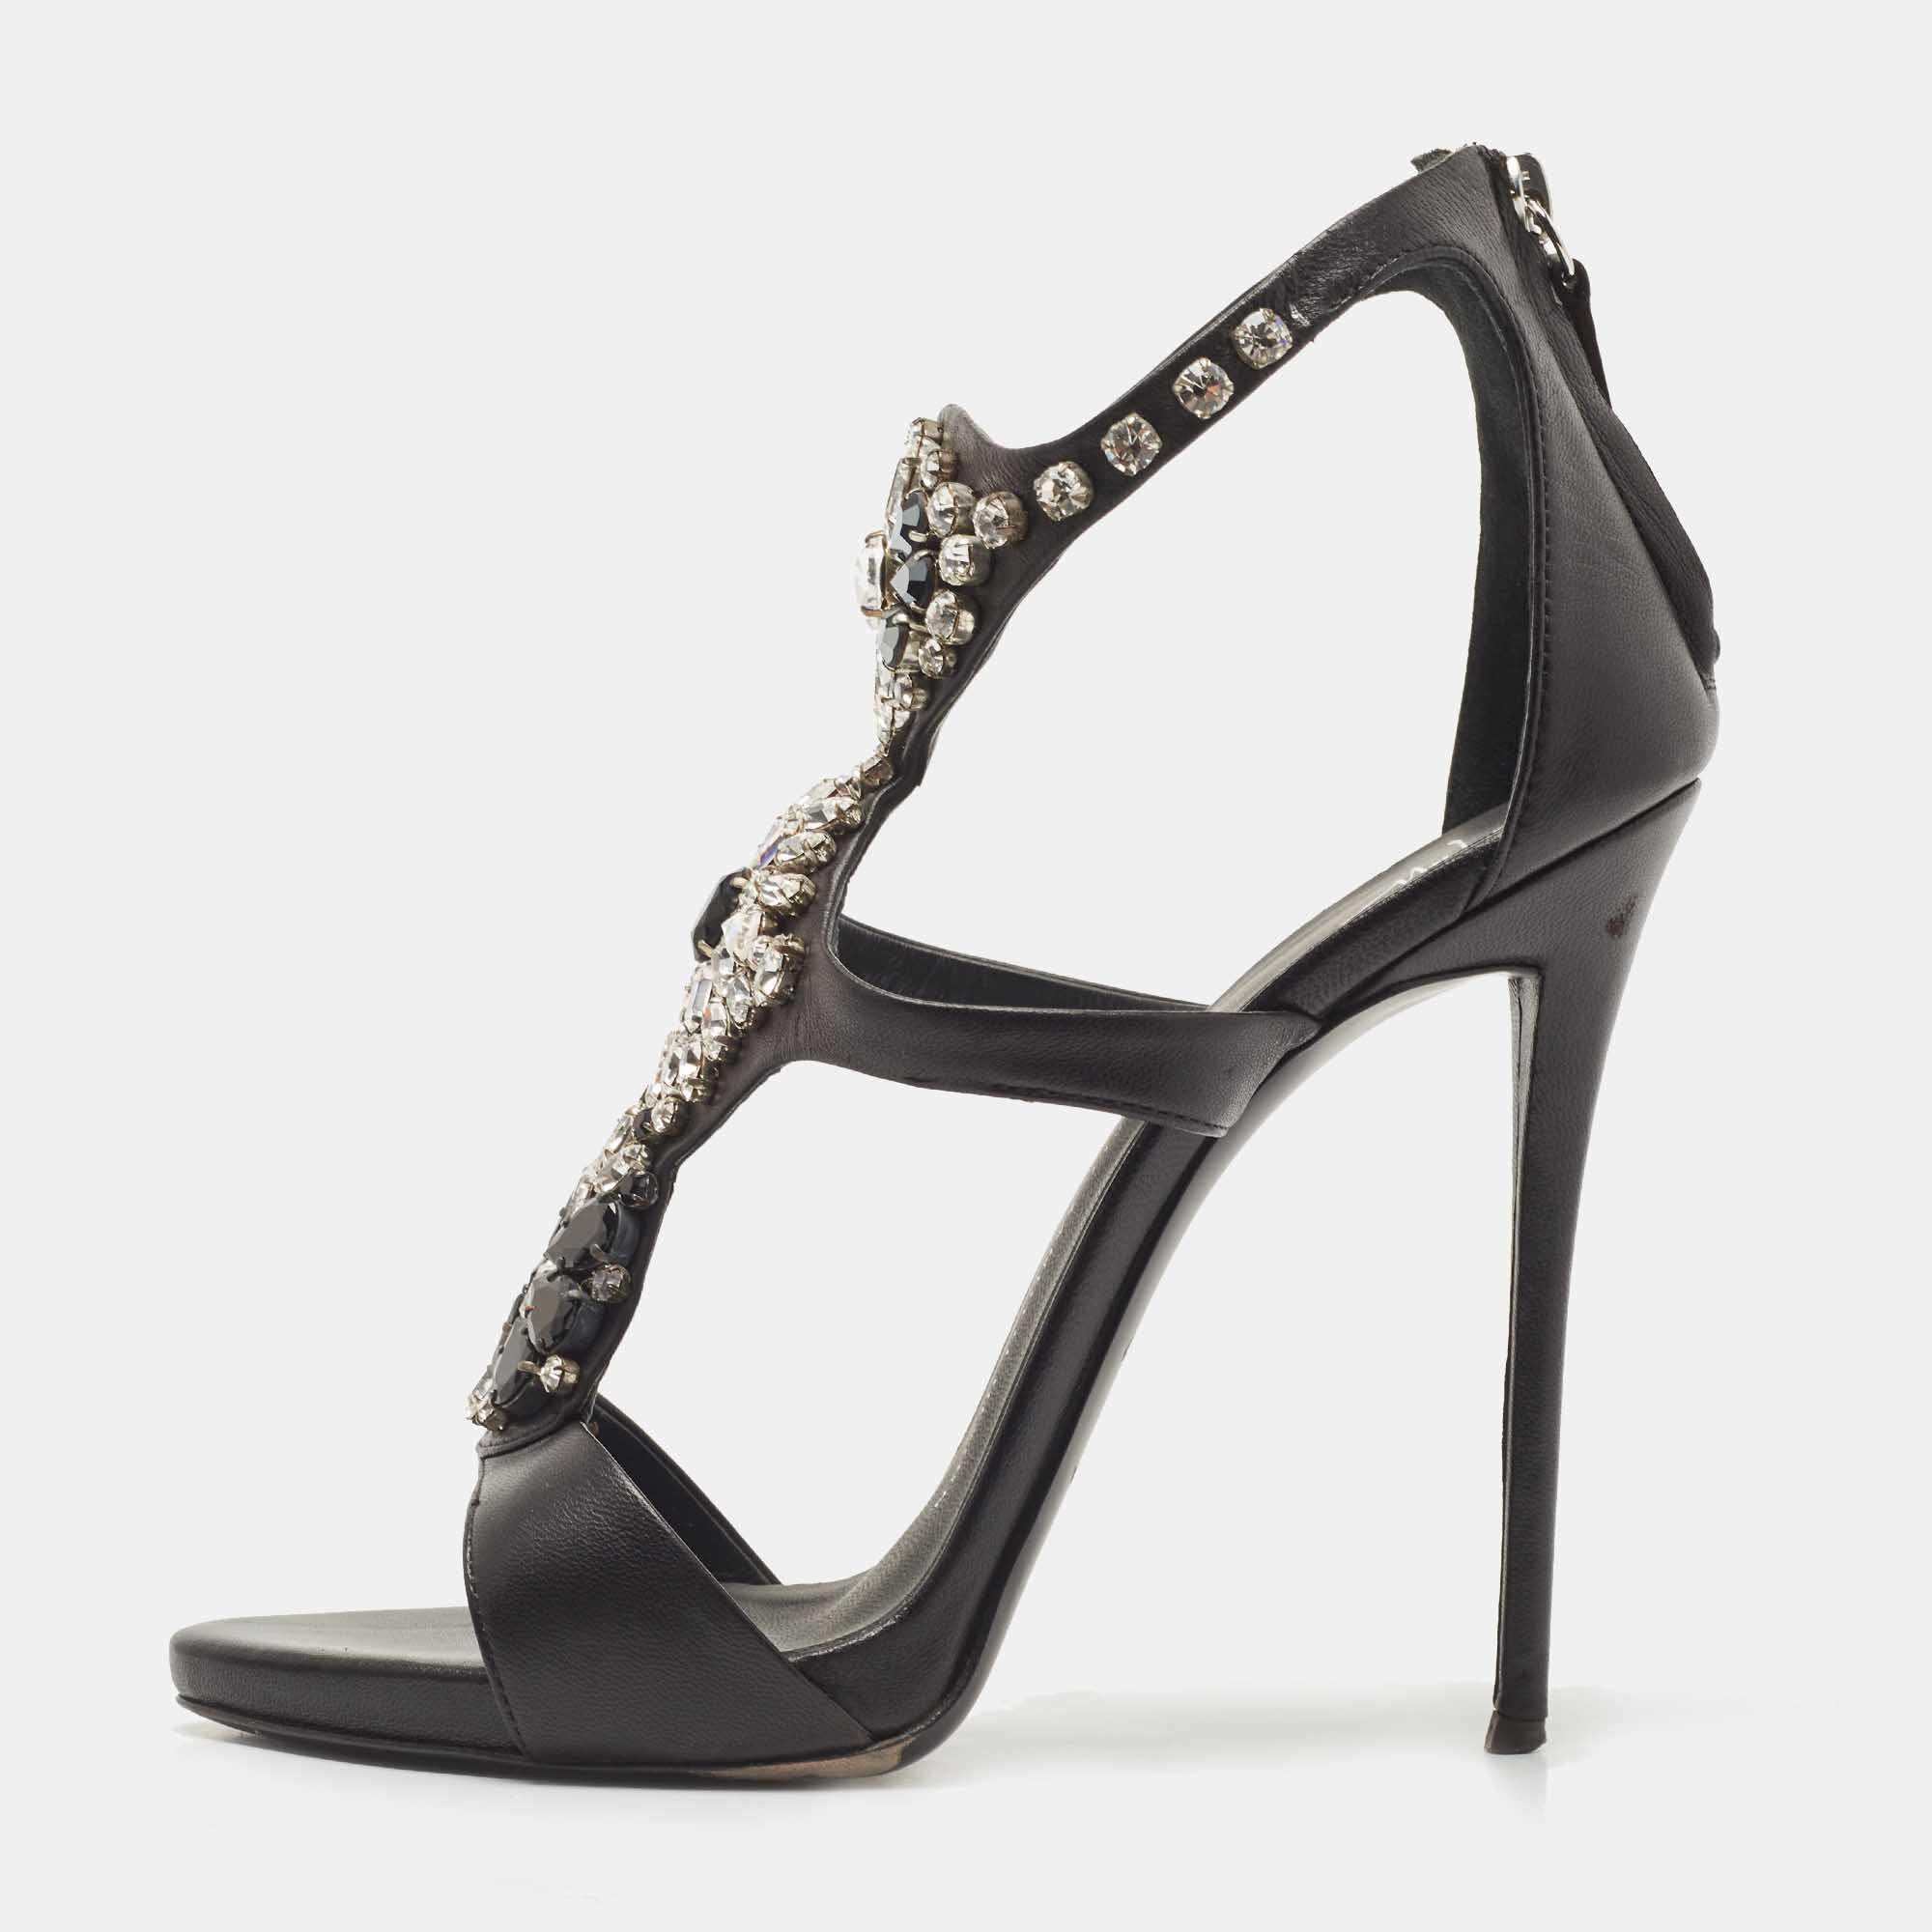 Giuseppe Zanotti Black Leather Crystal Embellished Strappy Sandals Size 39